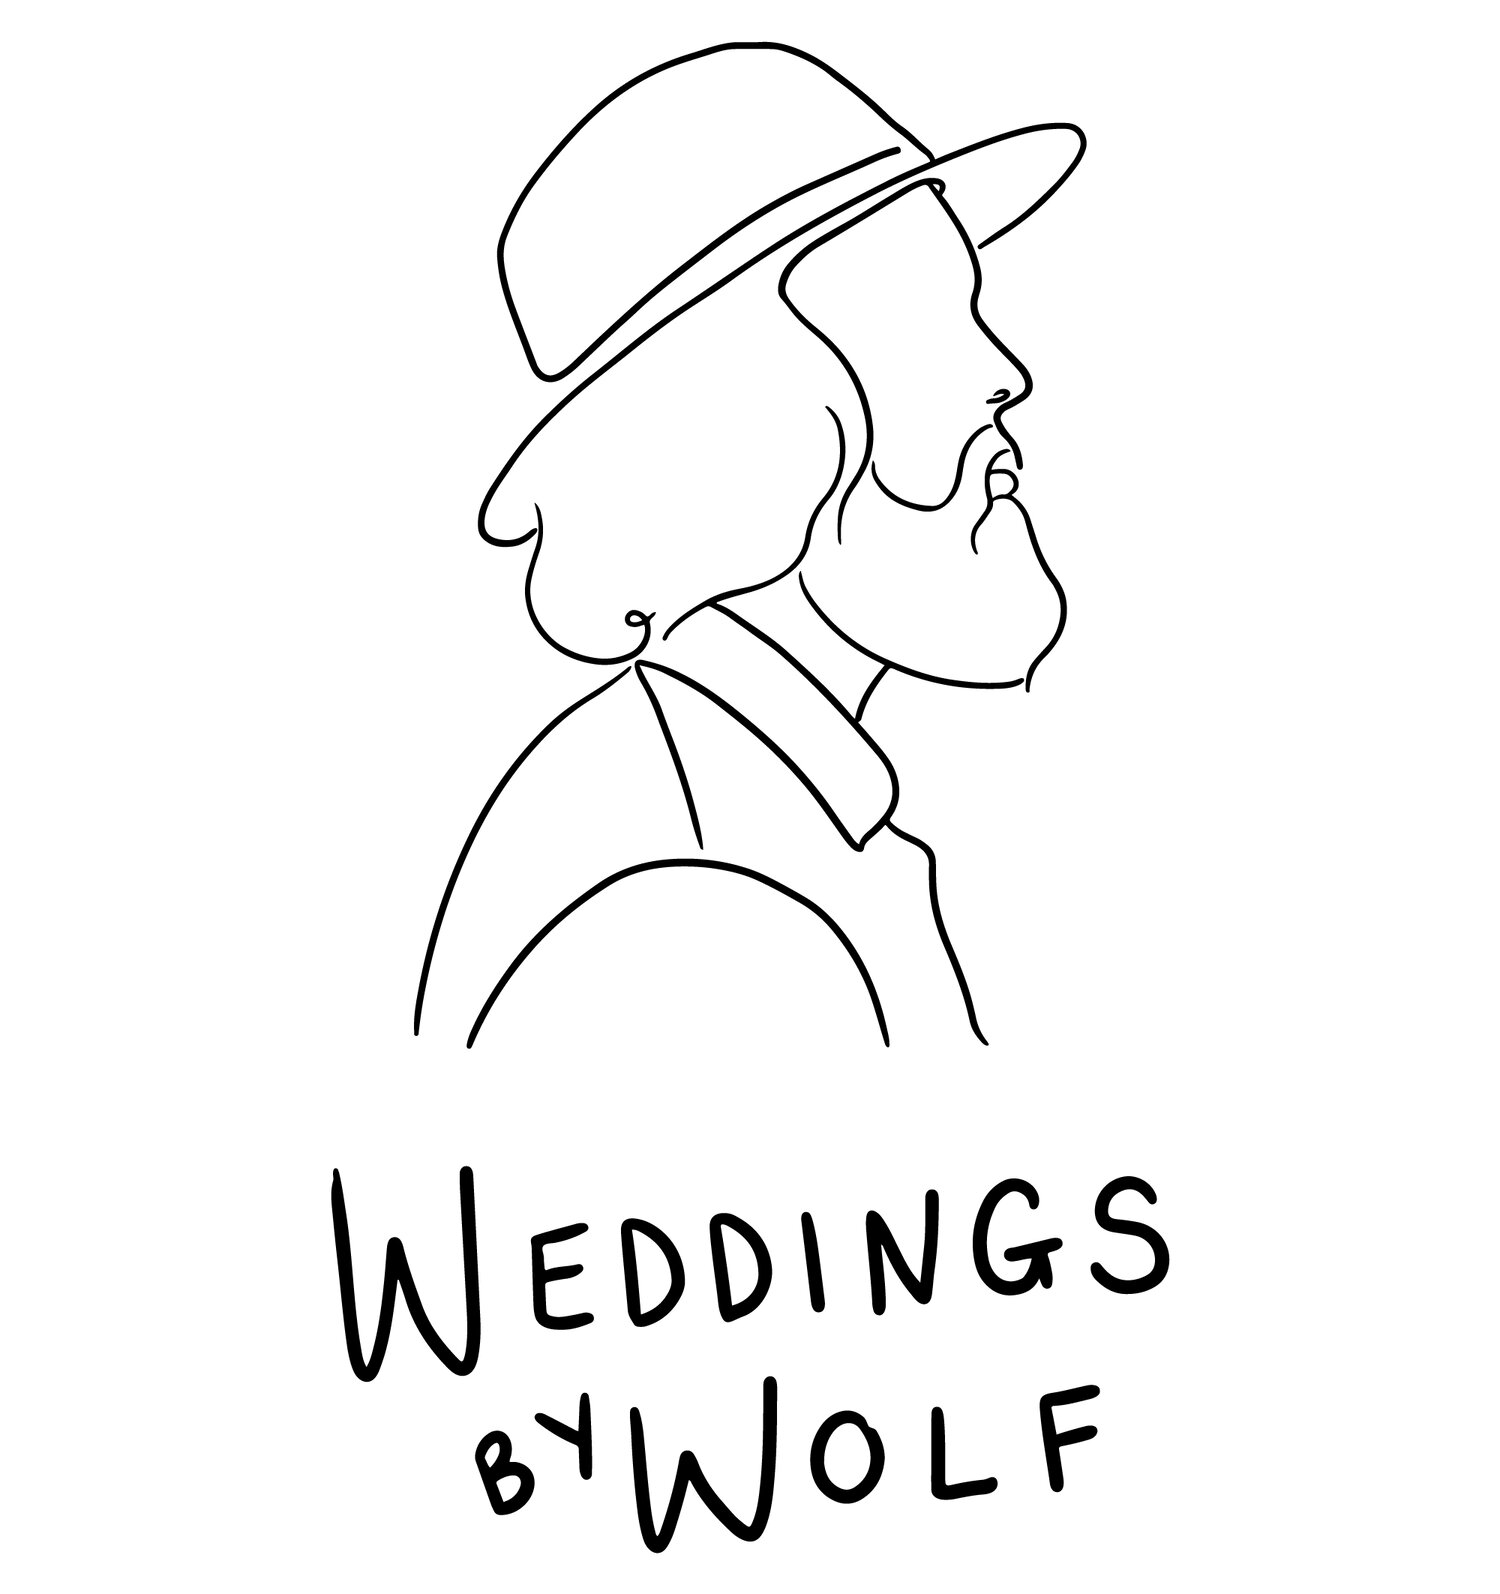 Weddings By Wolf